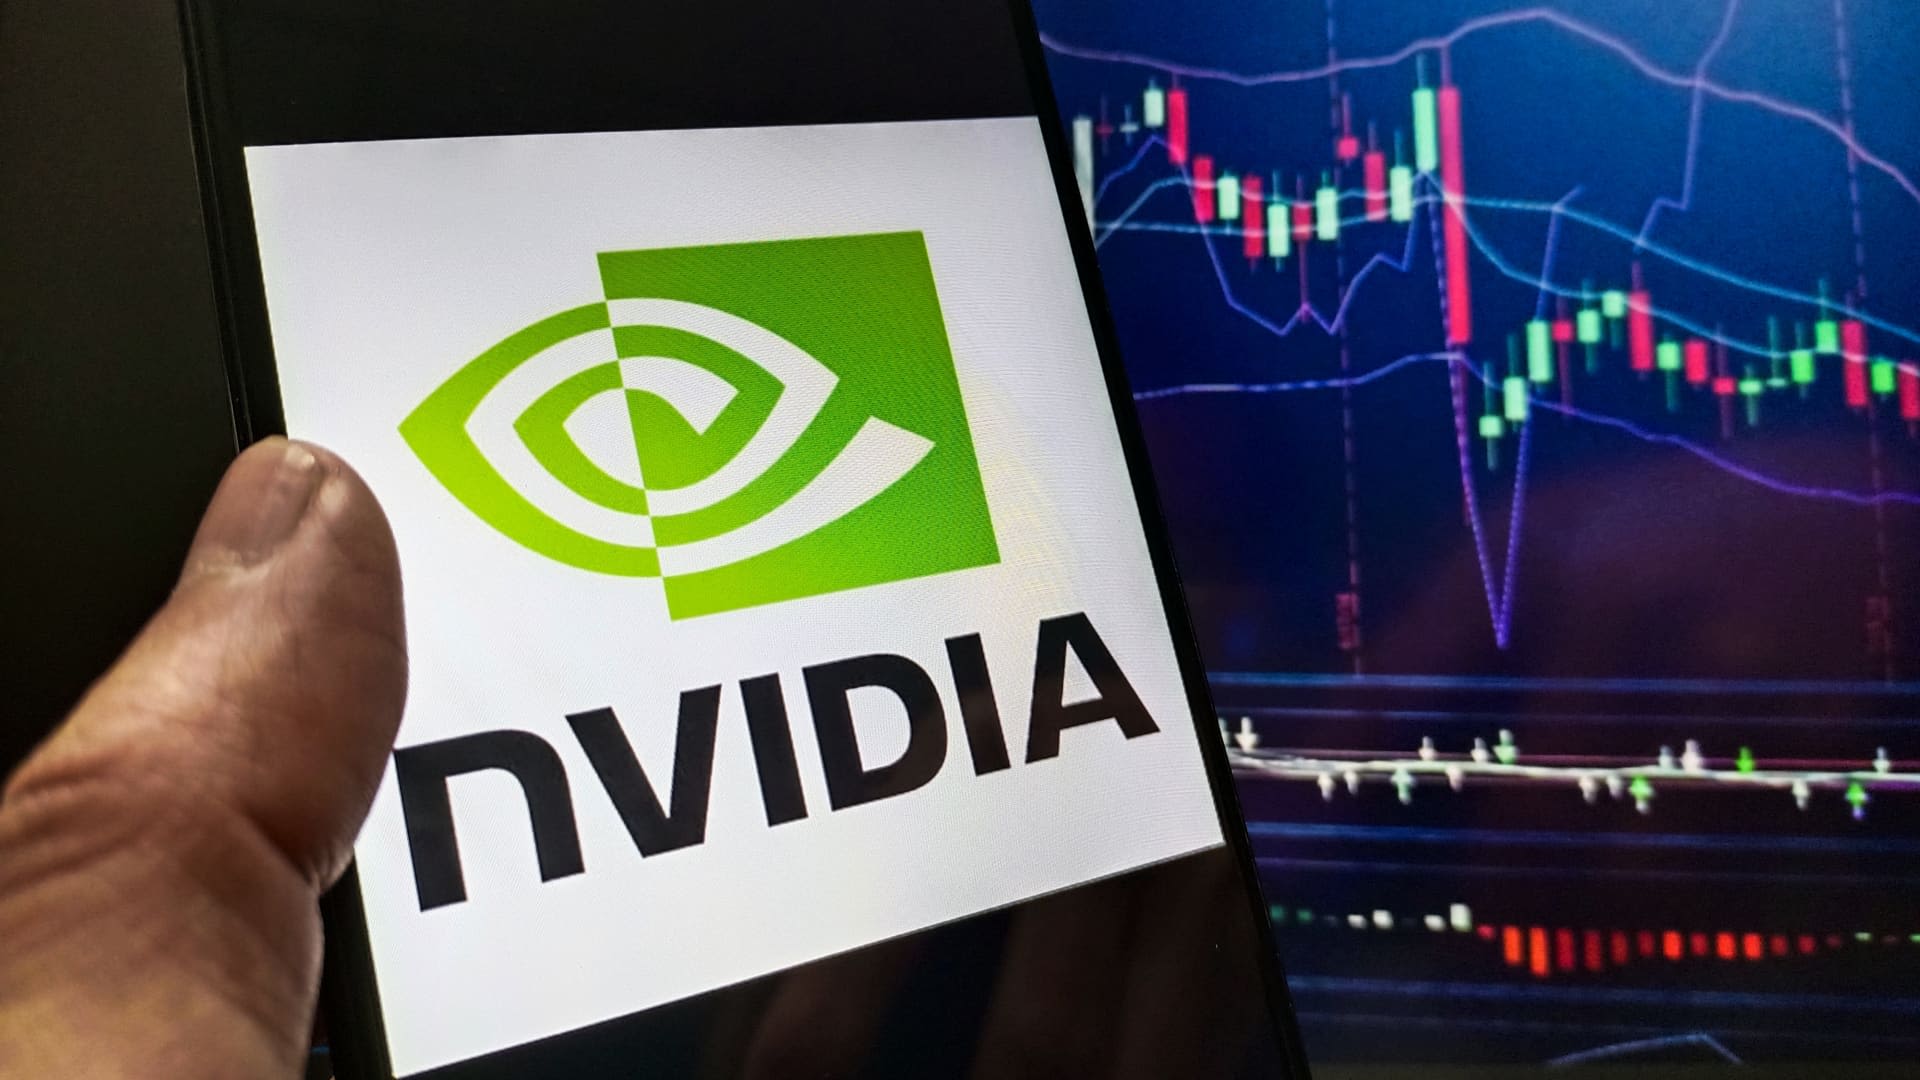 When Nvidia beats estimates, these 6 AI stocks tend to rise